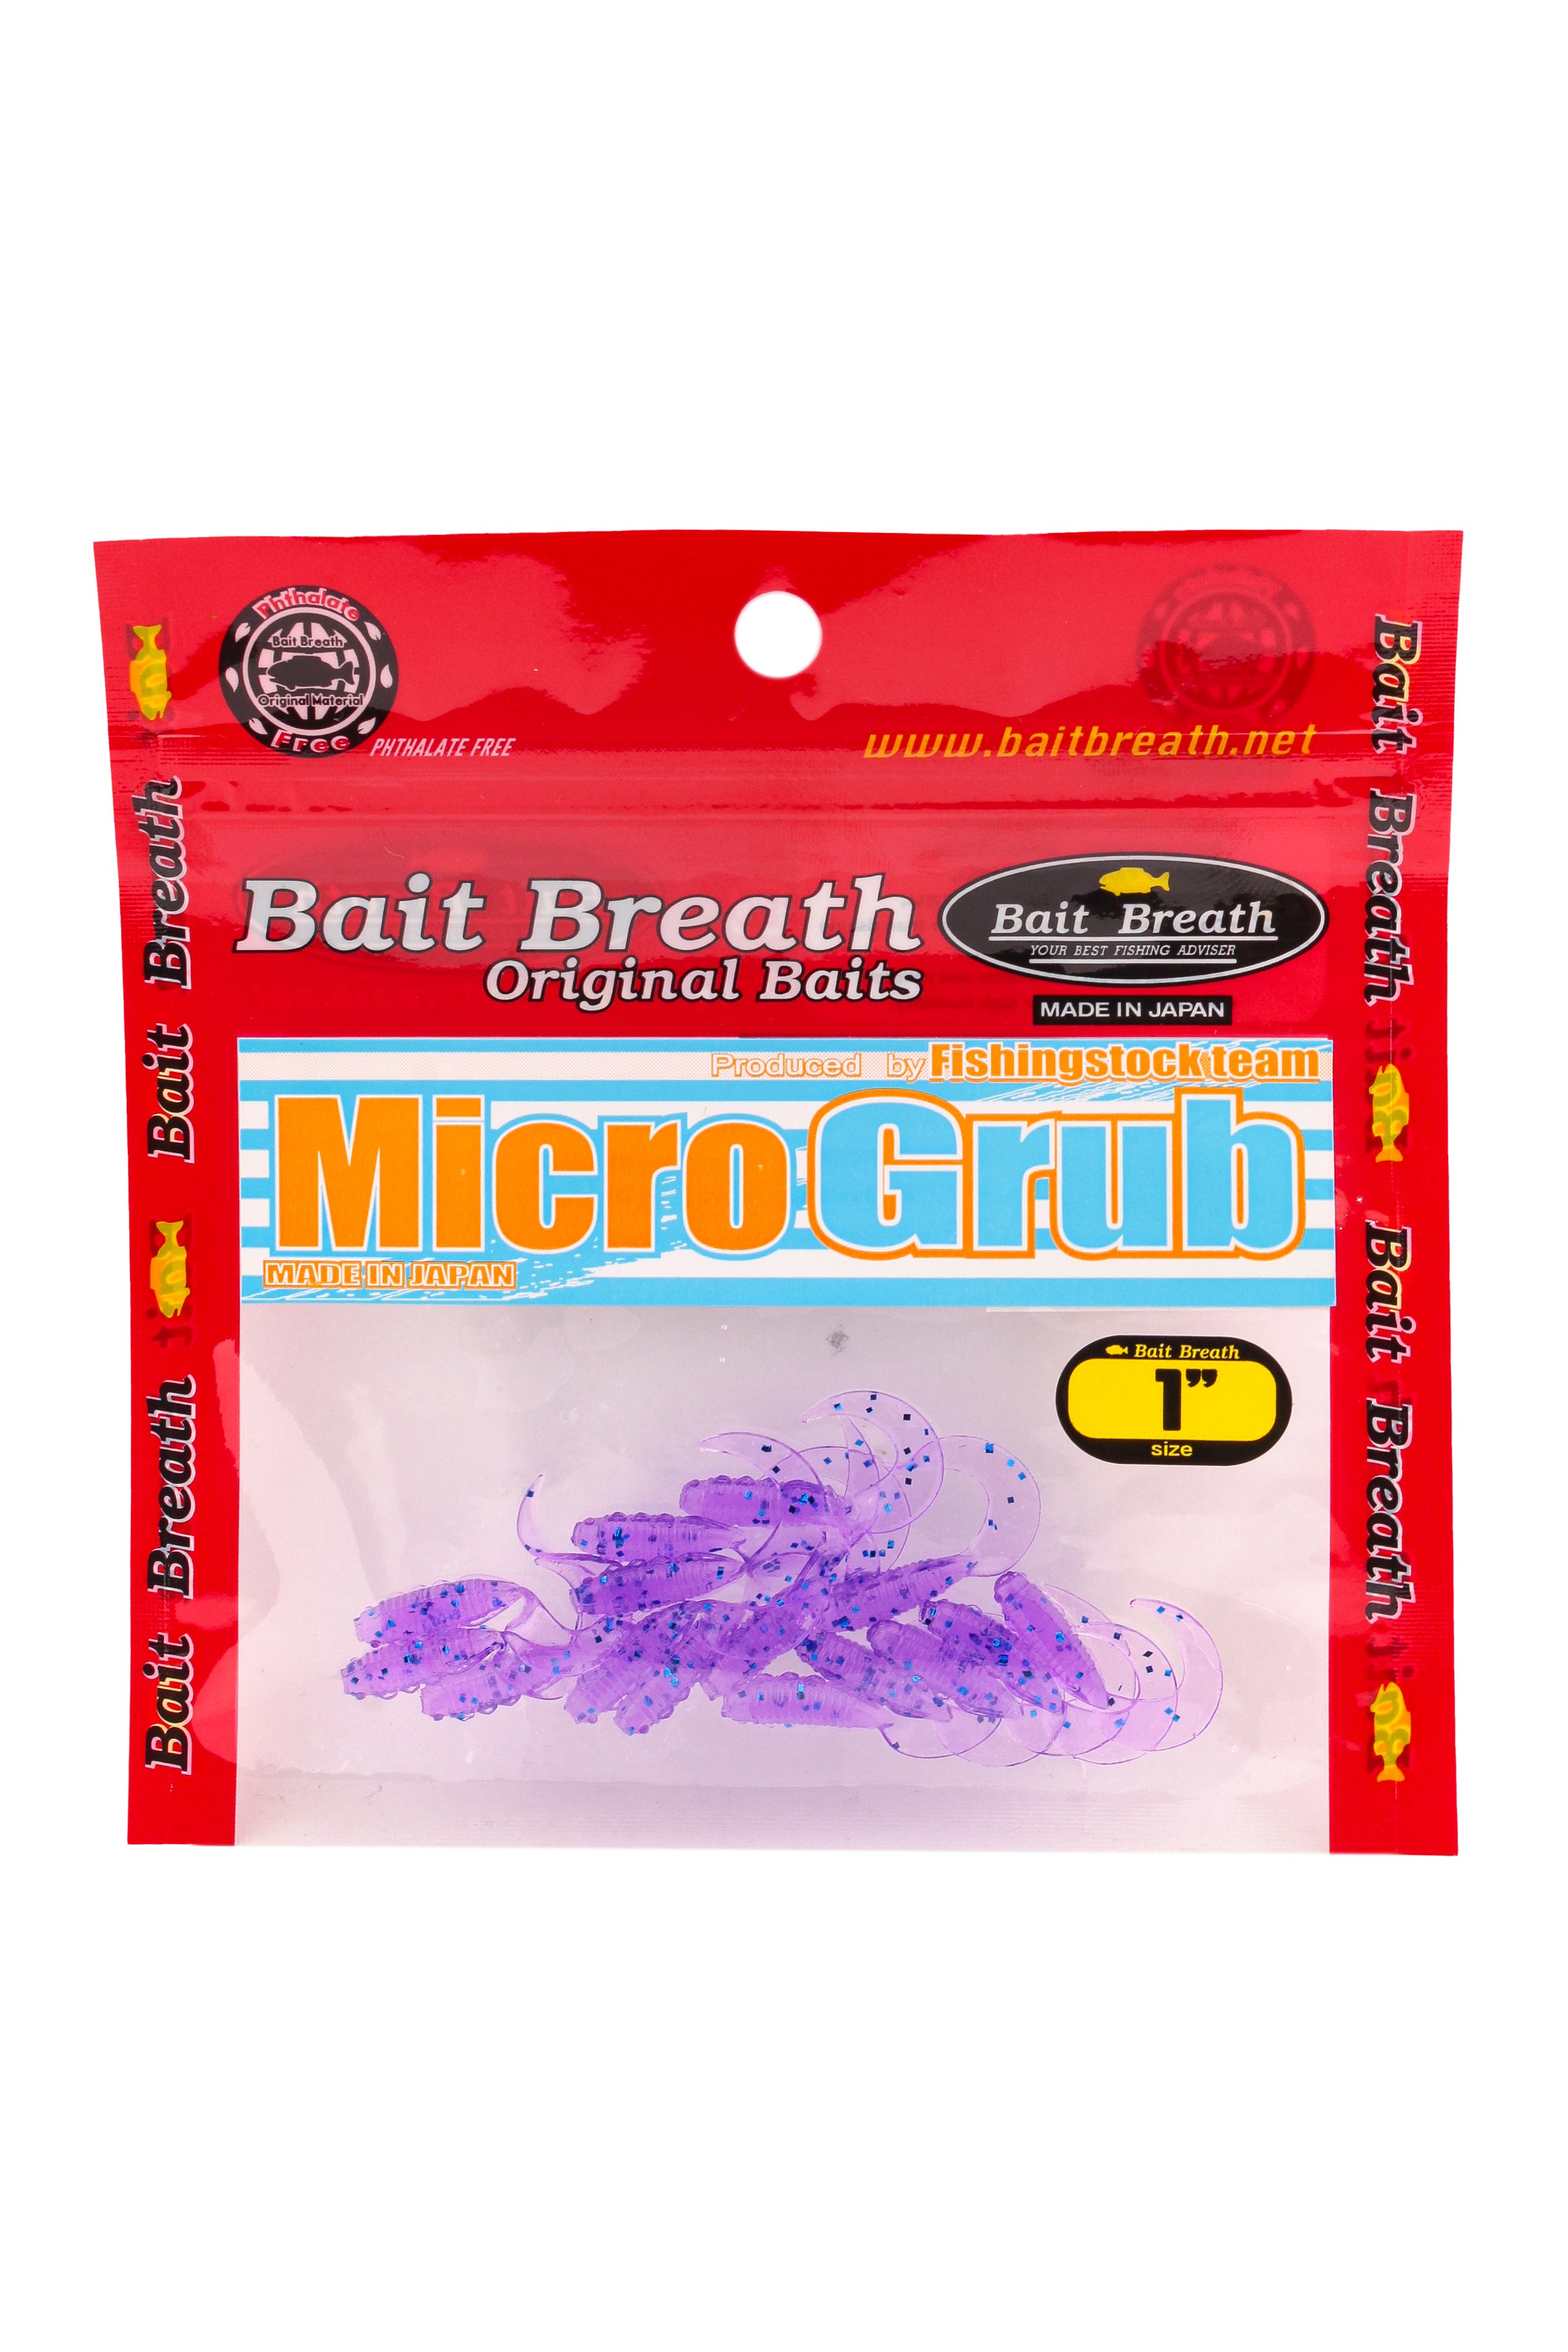 Приманка Bait Breath Micro Grub 1" Ur211 уп.15шт - фото 1